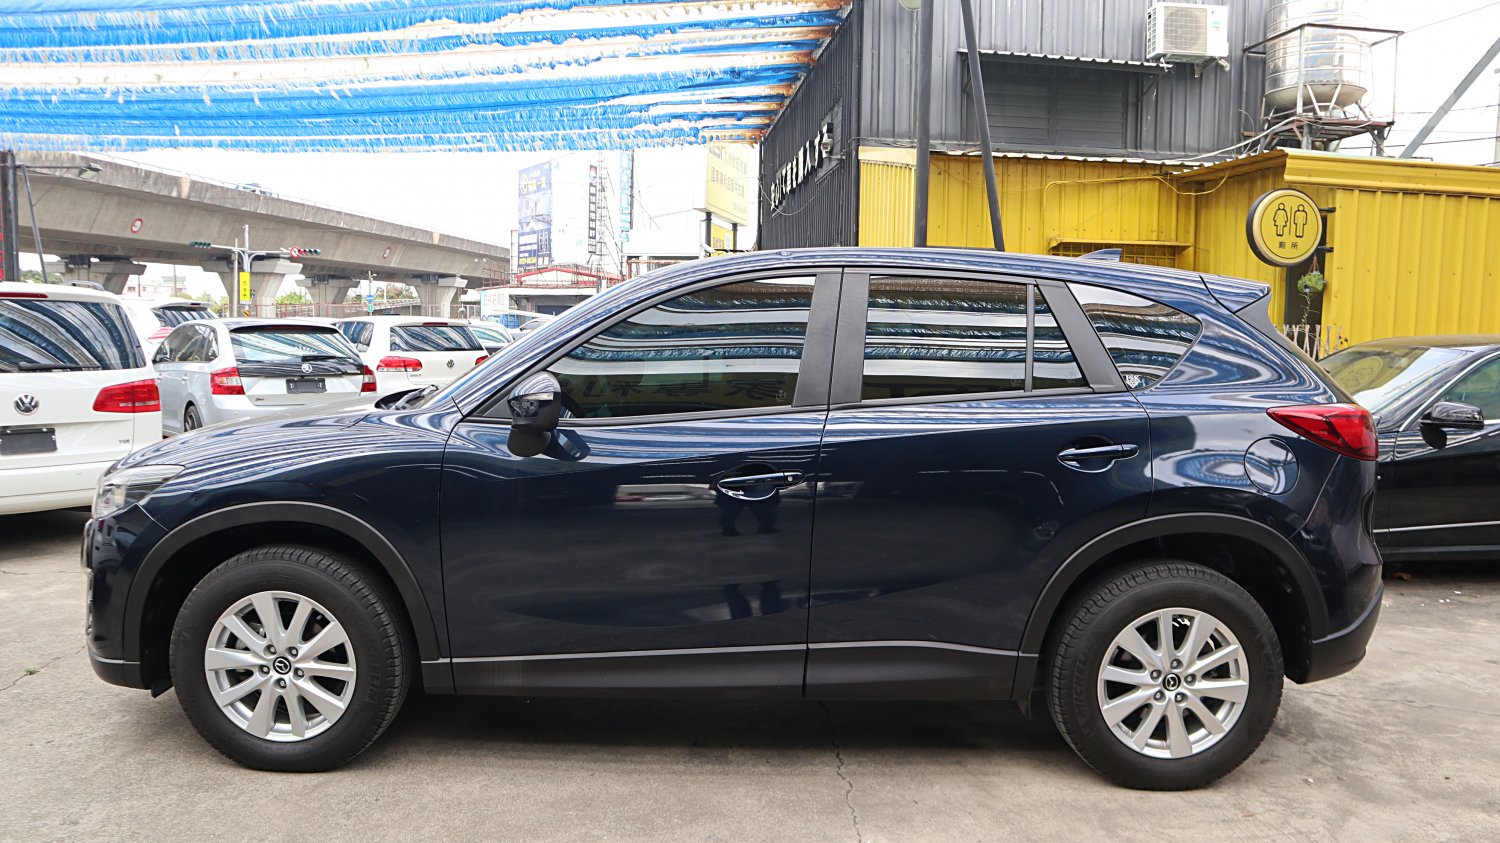 Mazda 馬自達 ／ CX-5 ／ 2015年 ／ 2015年Mazda CX-5 深藍色 馬自達中古車 ／ 九州欣旺汽車 (台南)